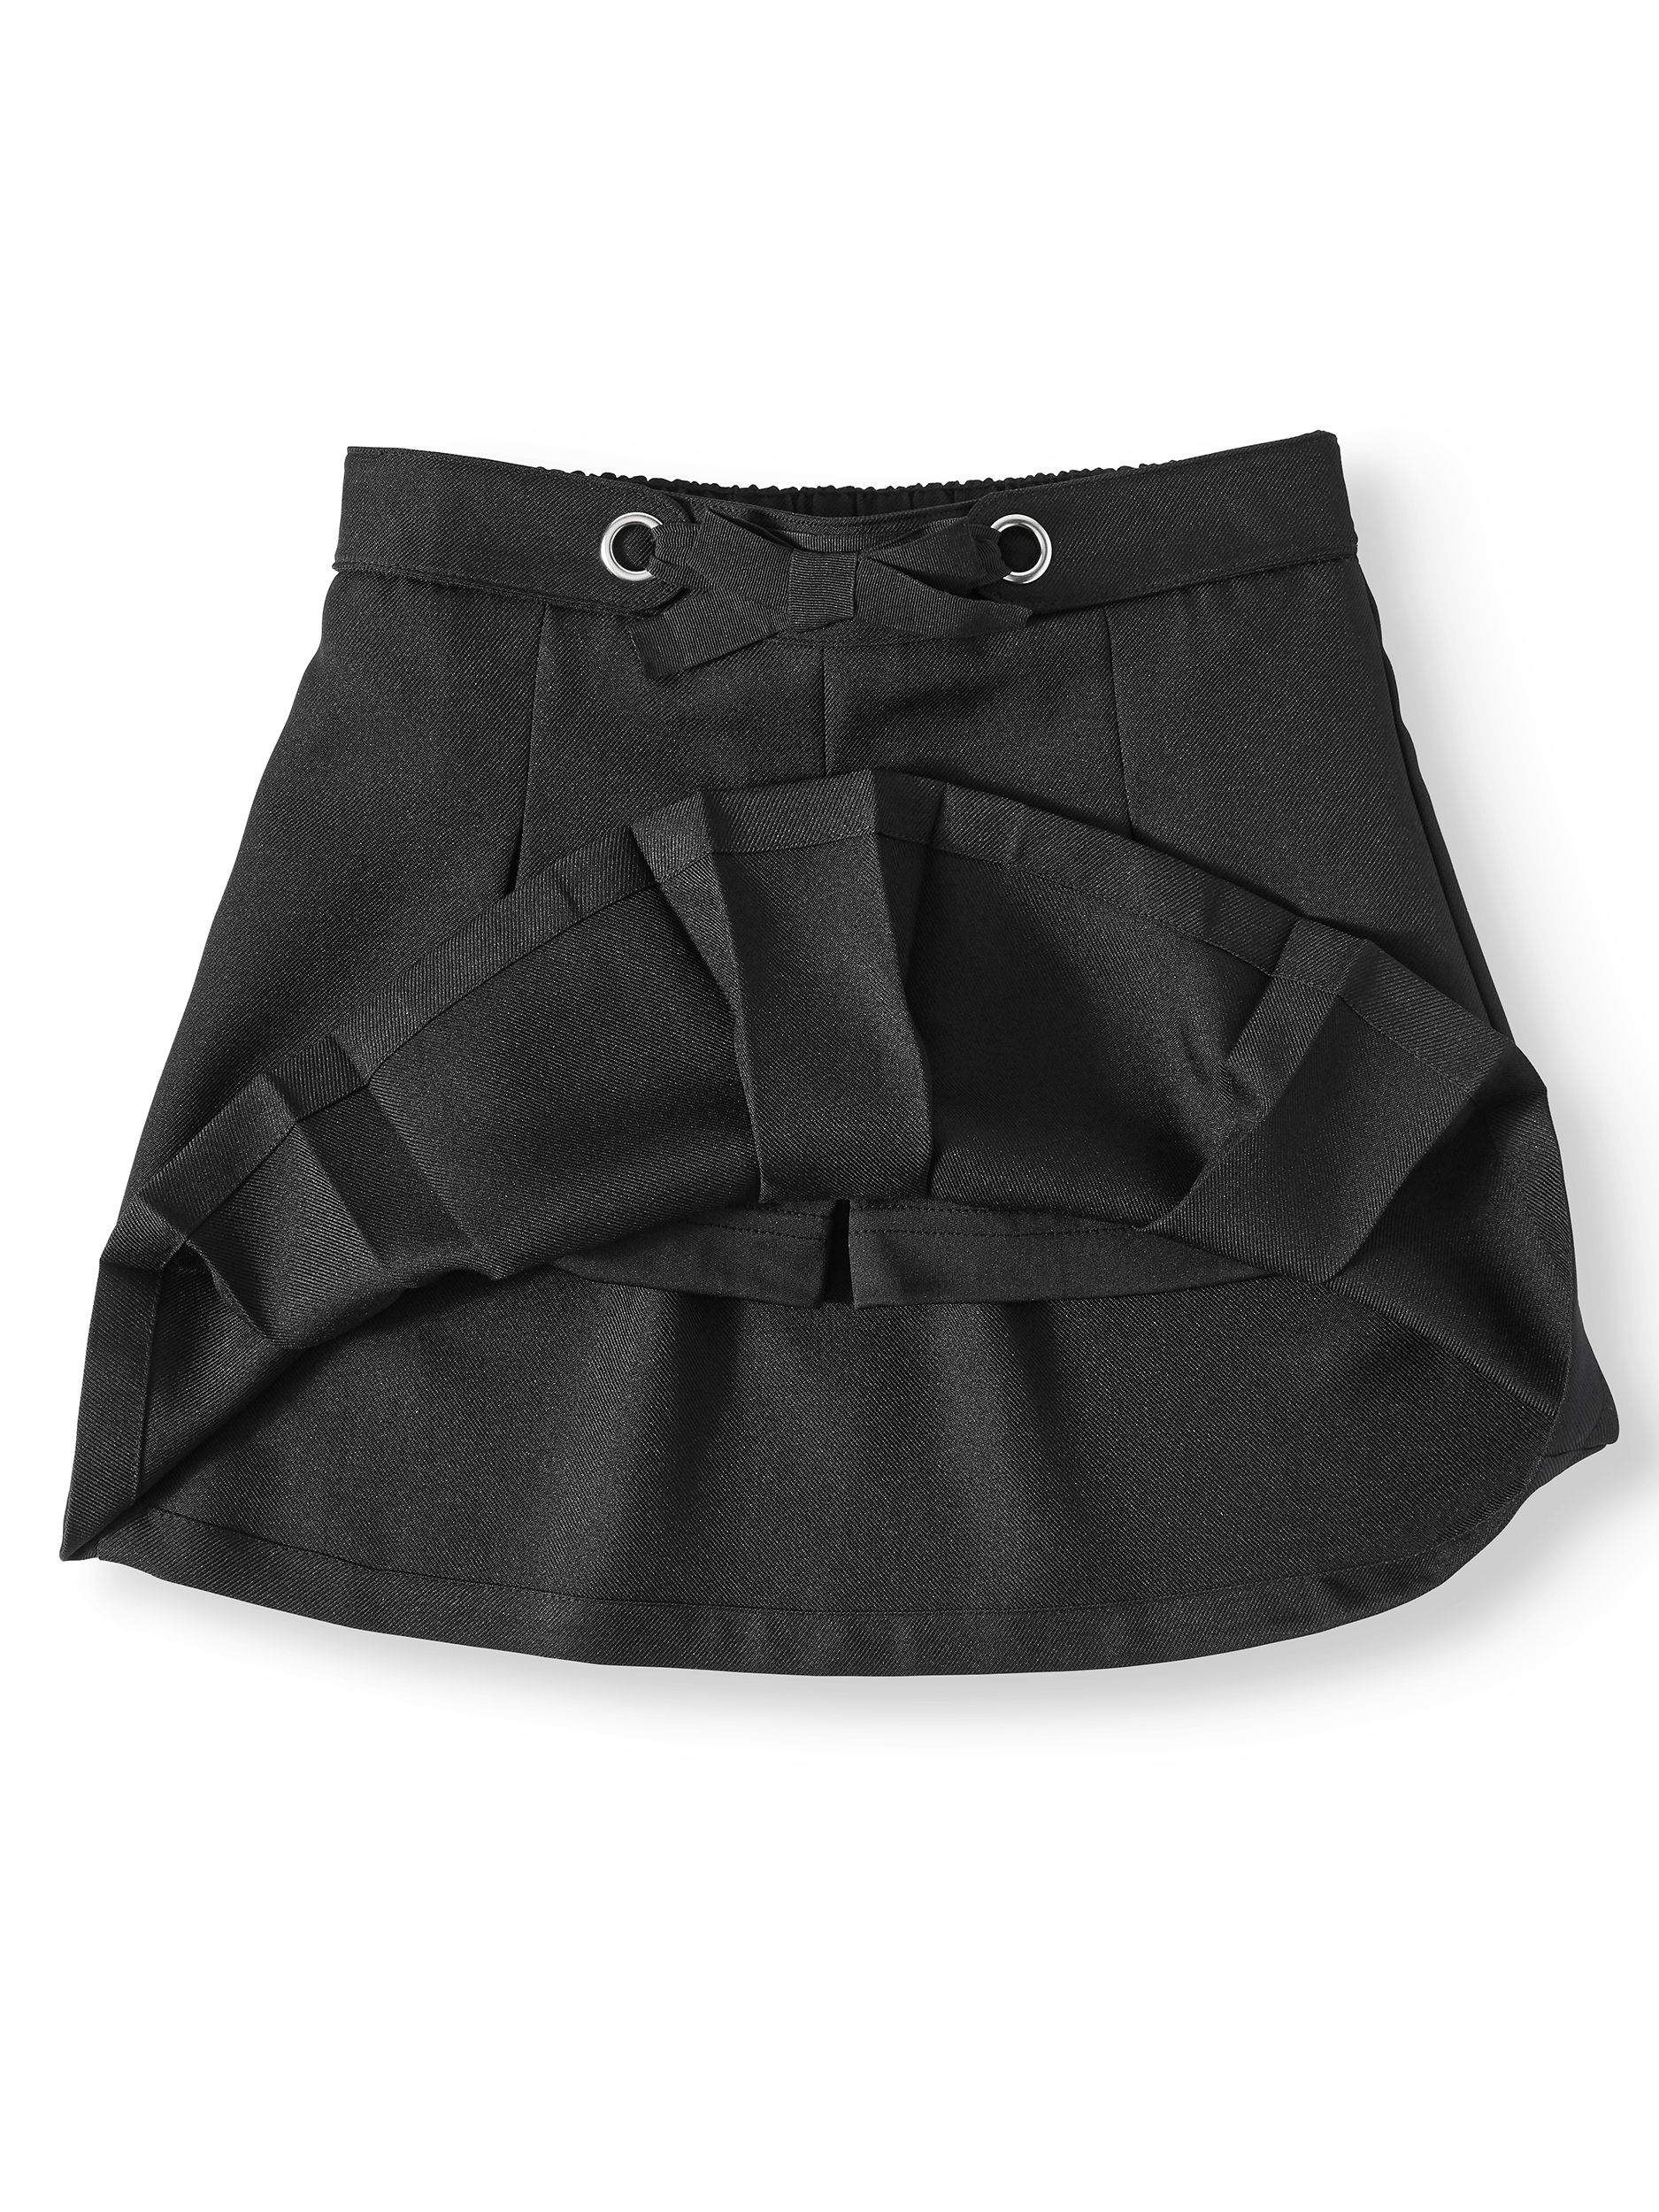 Wonder Nation Girls School Uniform Bow Scooter Skirt, Sizes 4-16 & Plus - image 2 of 3